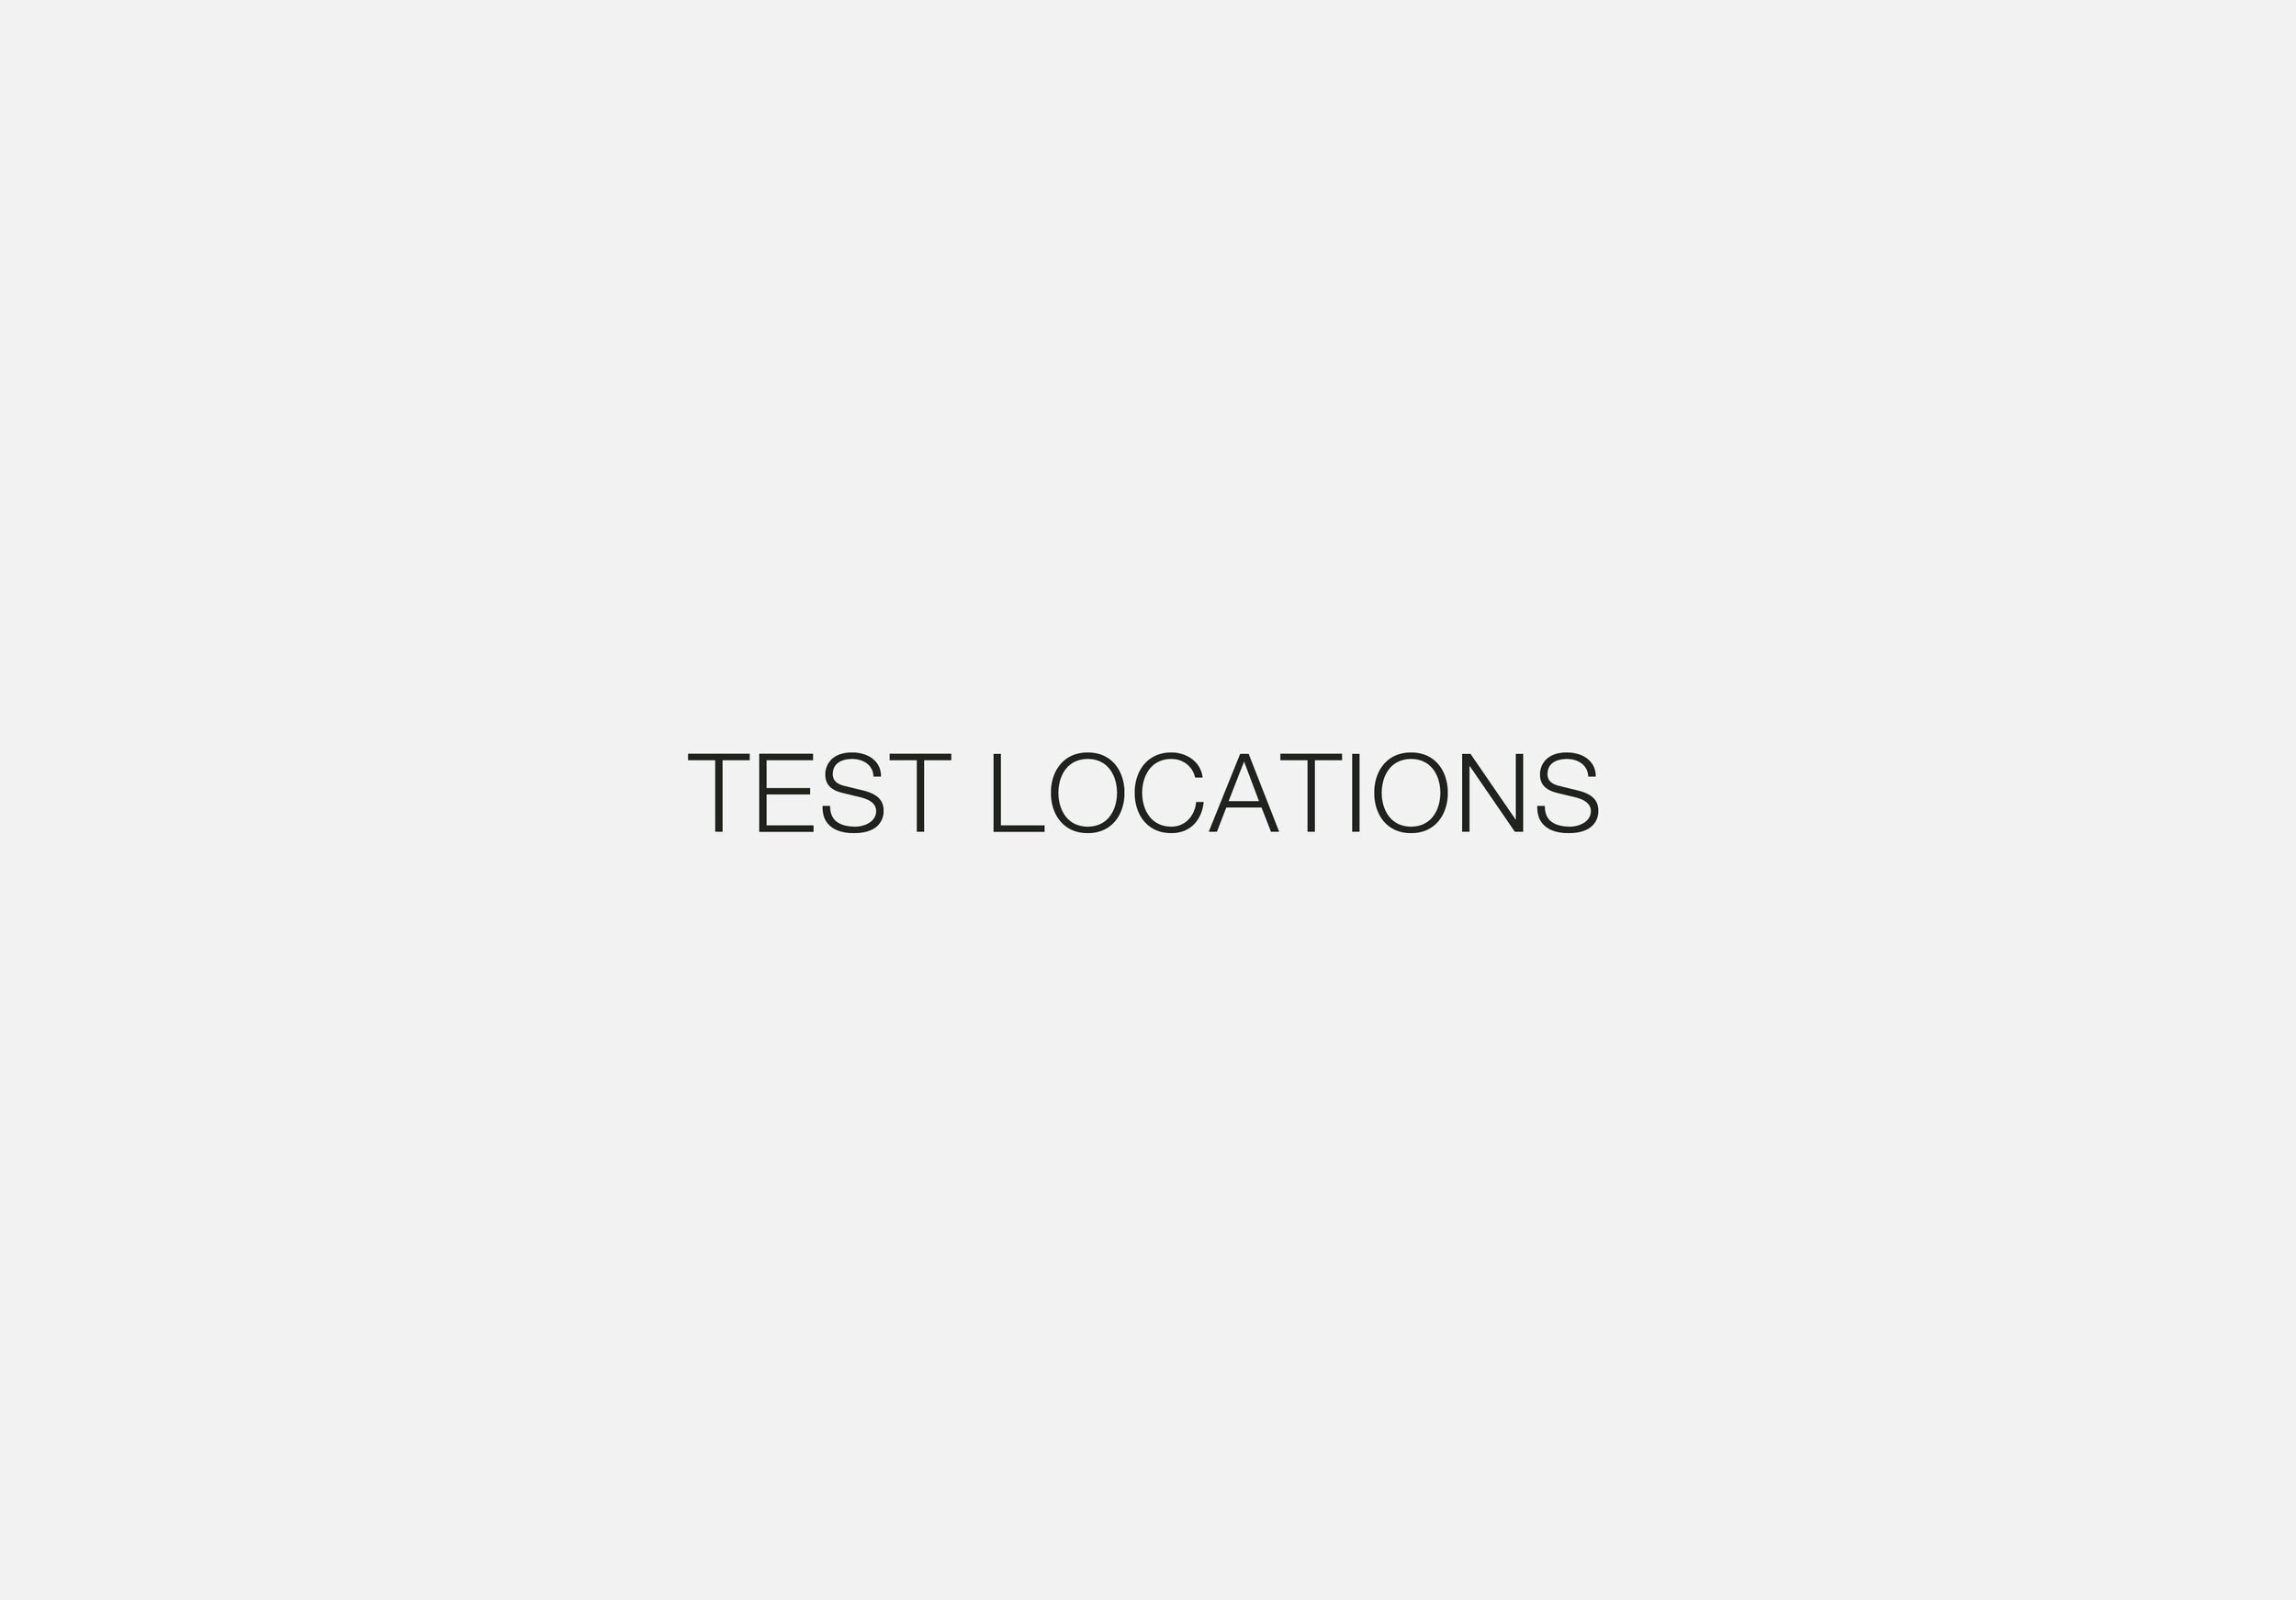 191111 Diagrams Test locations.jpg